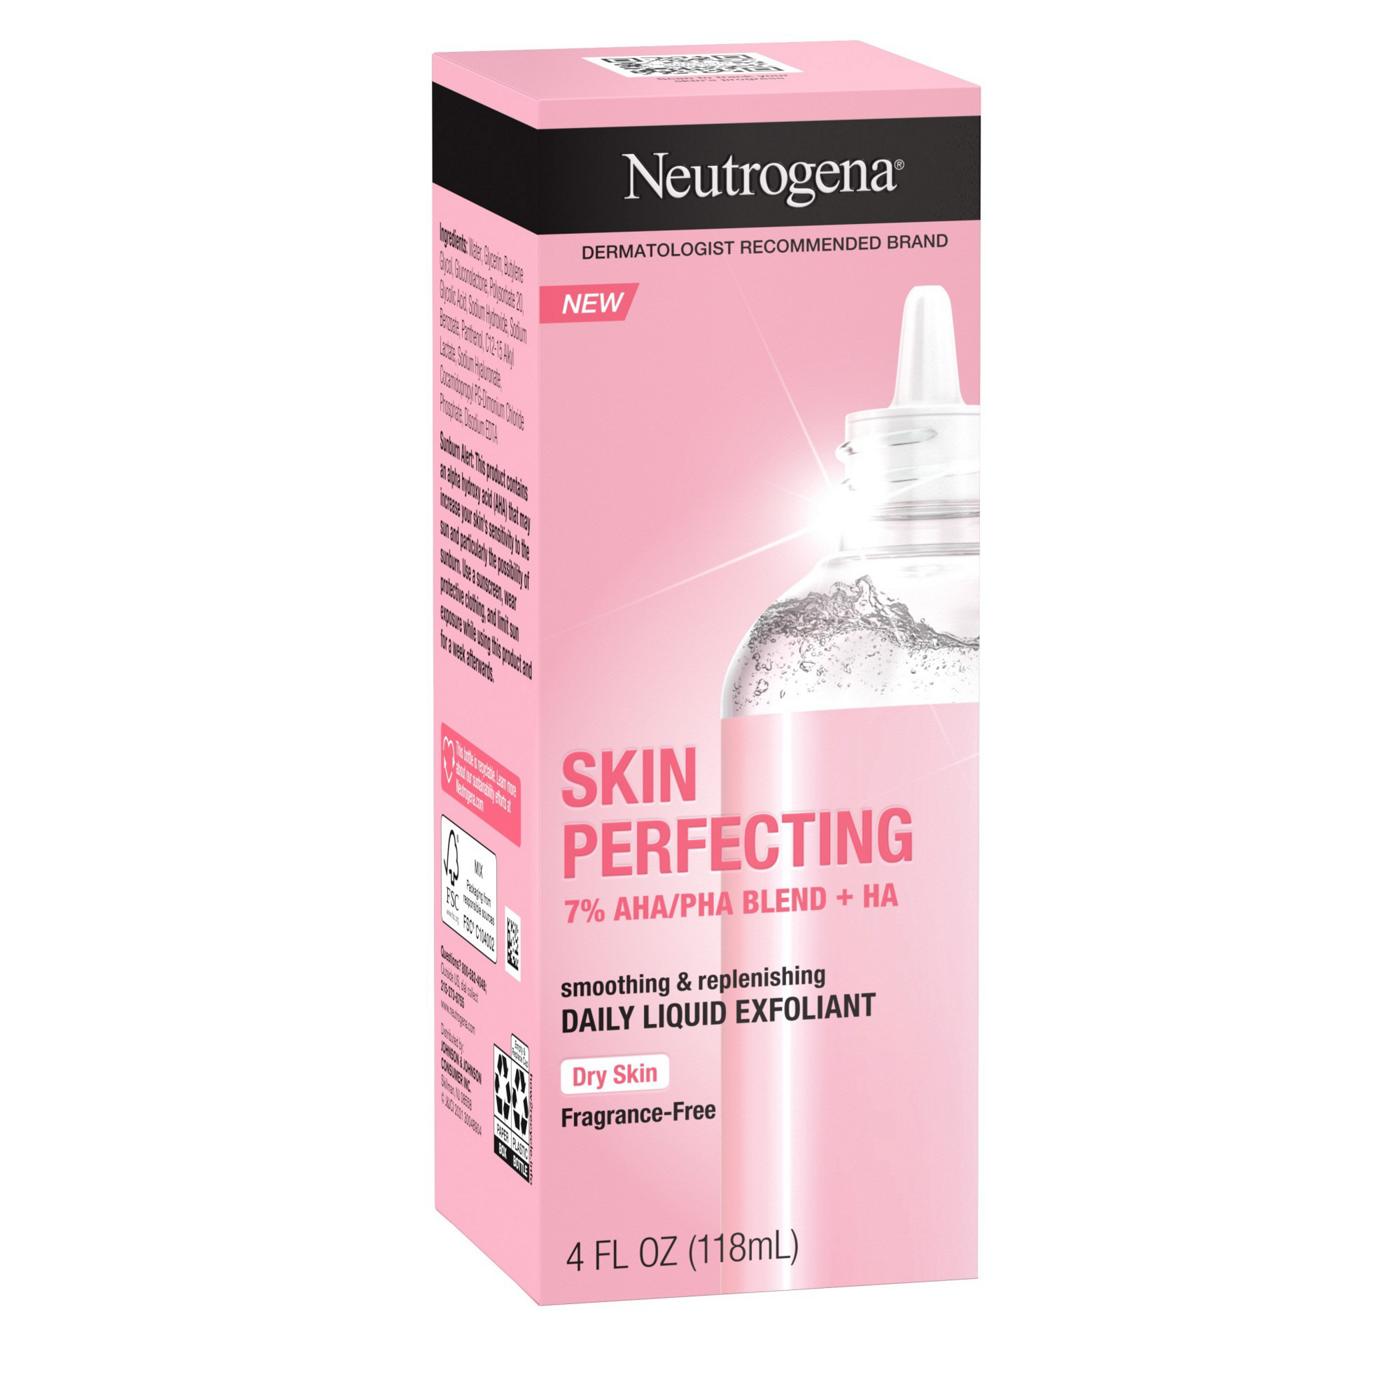 Neutrogena Perfecting Dry Skin Liquid Exfoliant, Aha/Pha Blend + Ha; image 1 of 8